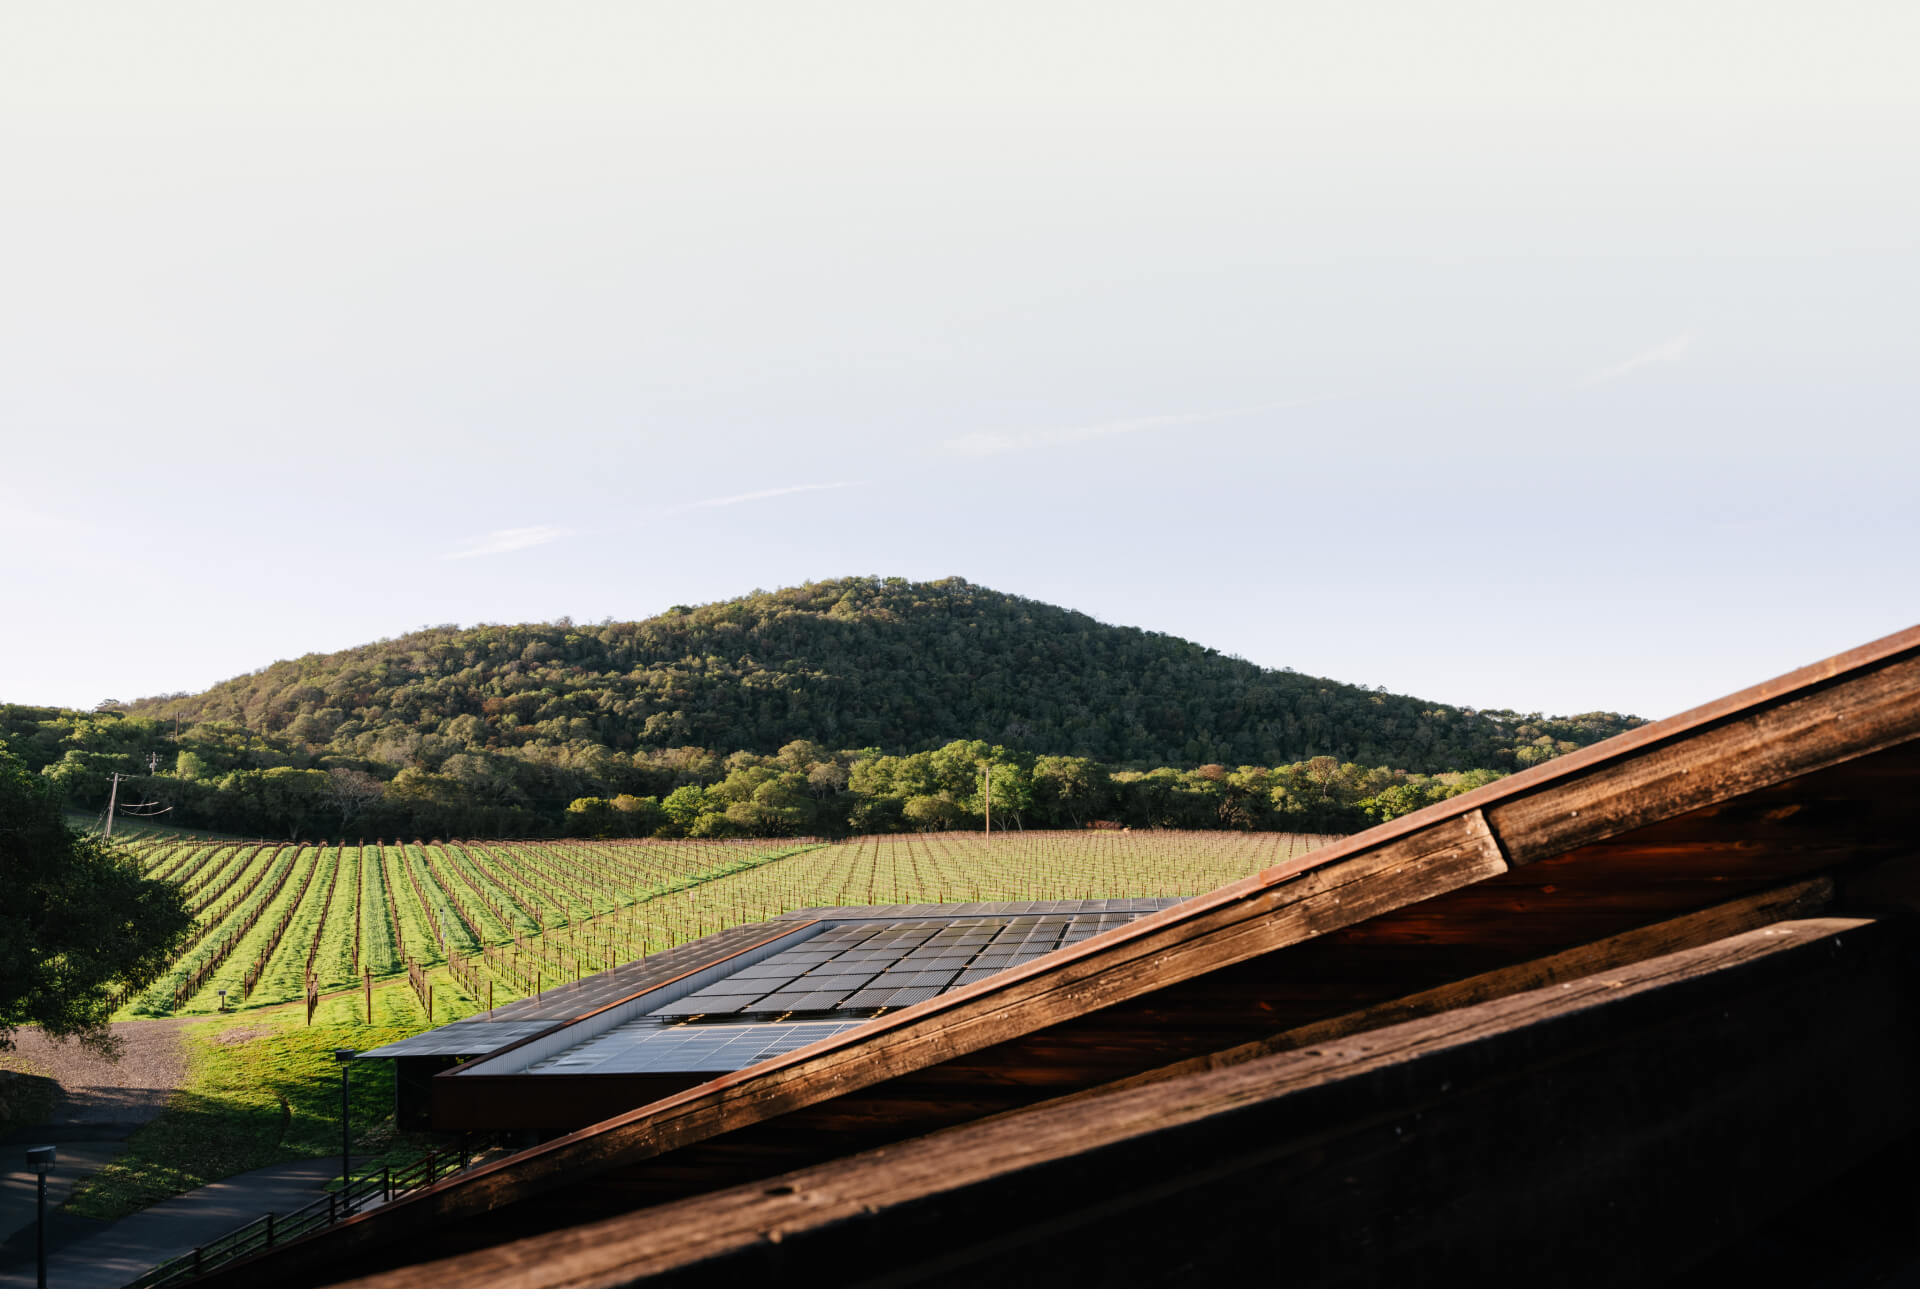 Chappellet vineyard and solar panels